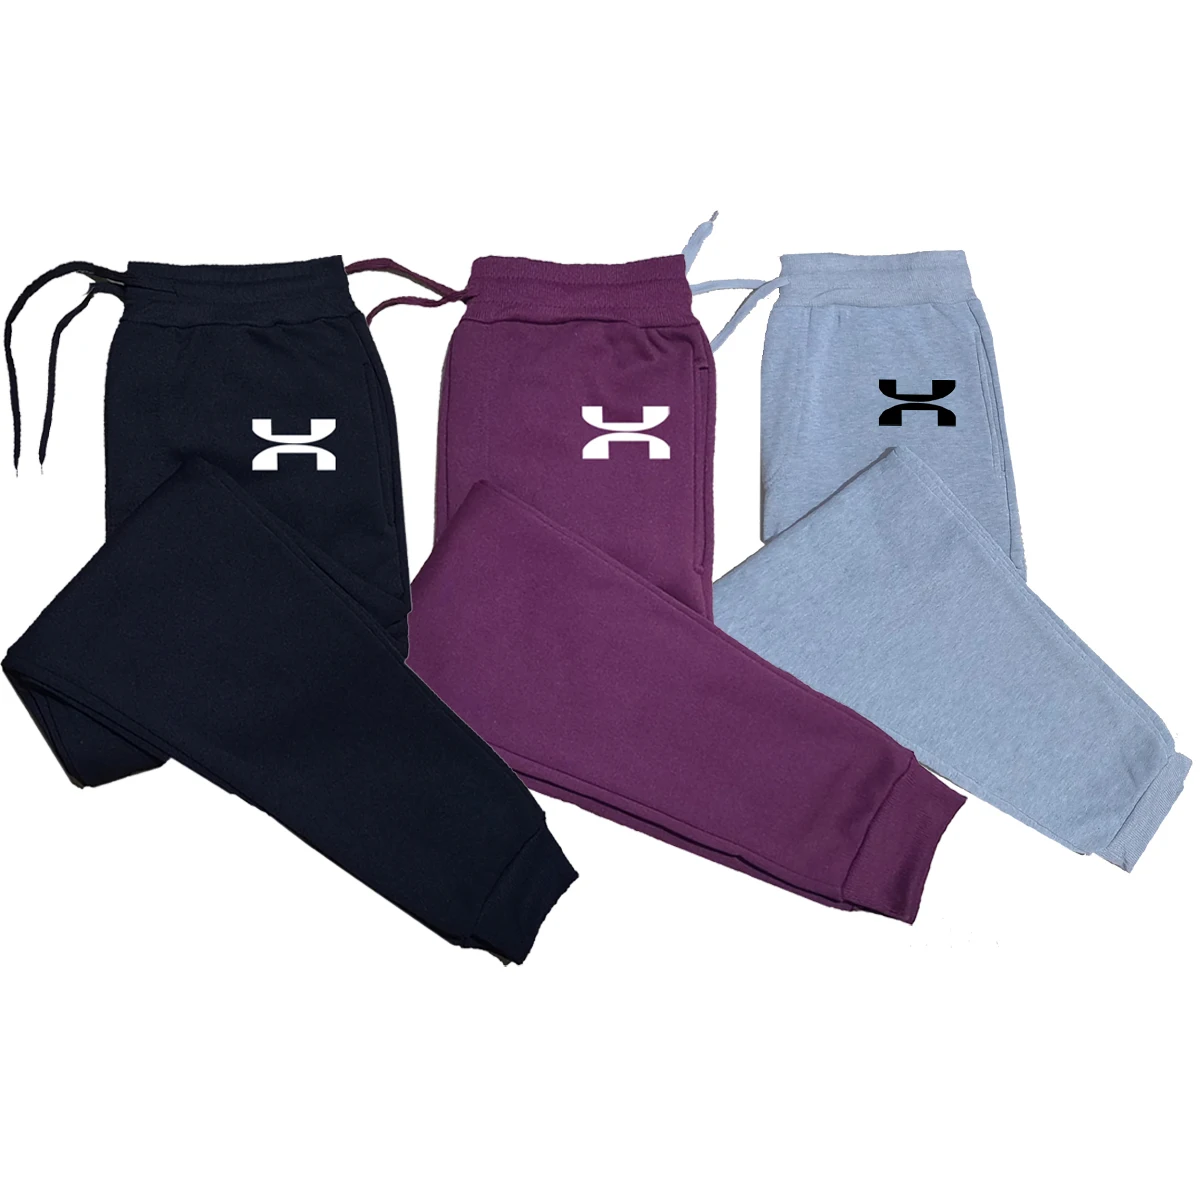 

2023 Prowow autumn and winter new men's casual pants sports jogging printed pants Harajuku Street pants elastic waist rope pants